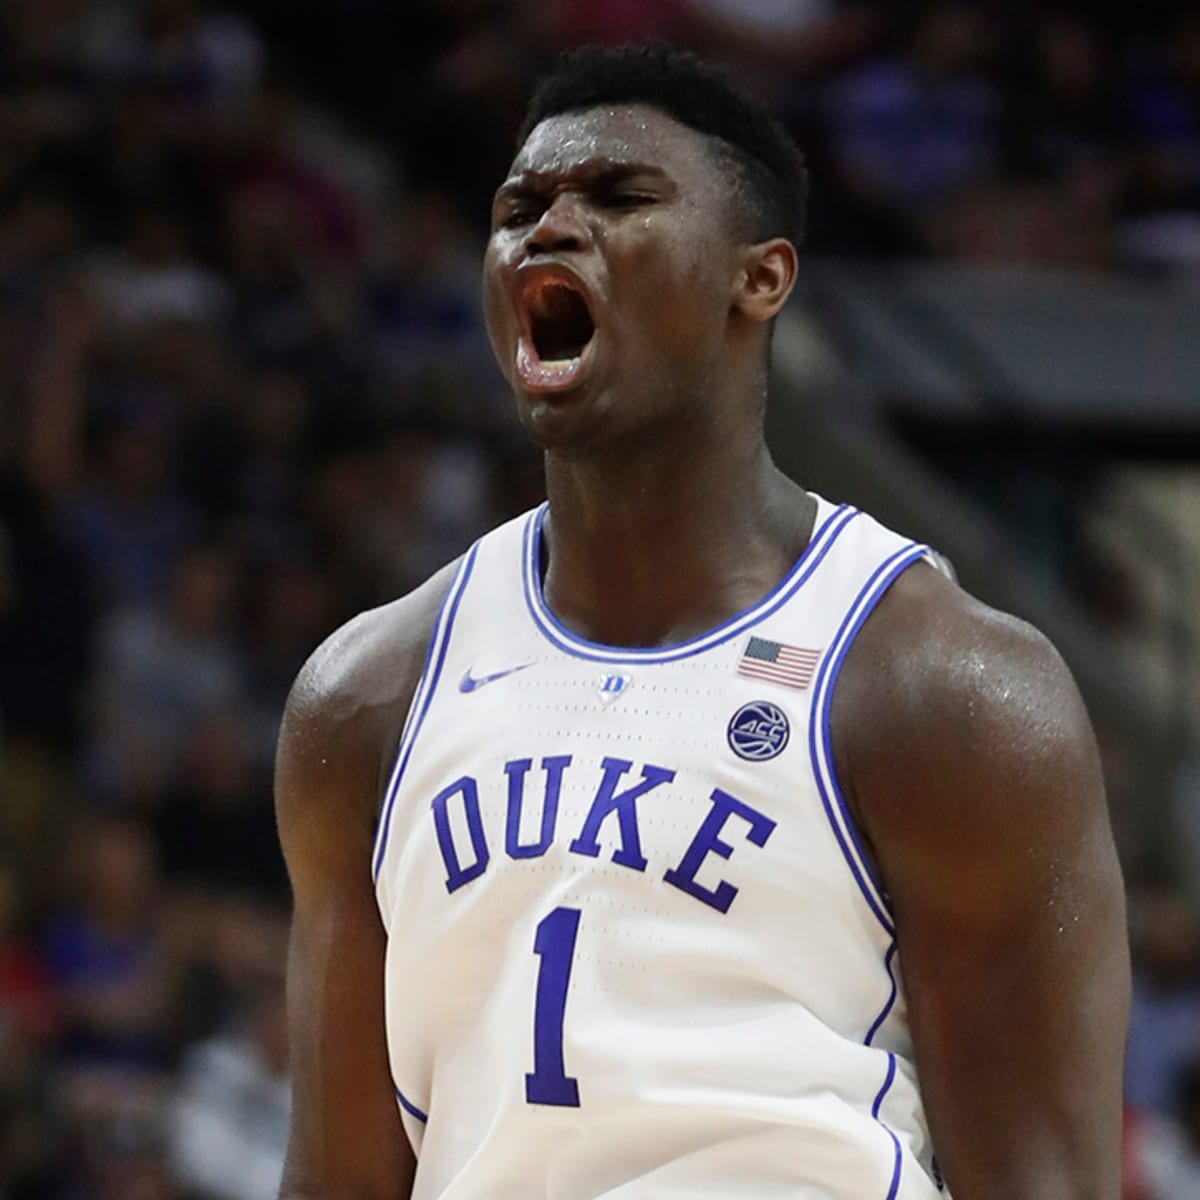 Could Duke's Zion Williamson Earn $1 Billion In His Basketball Career?